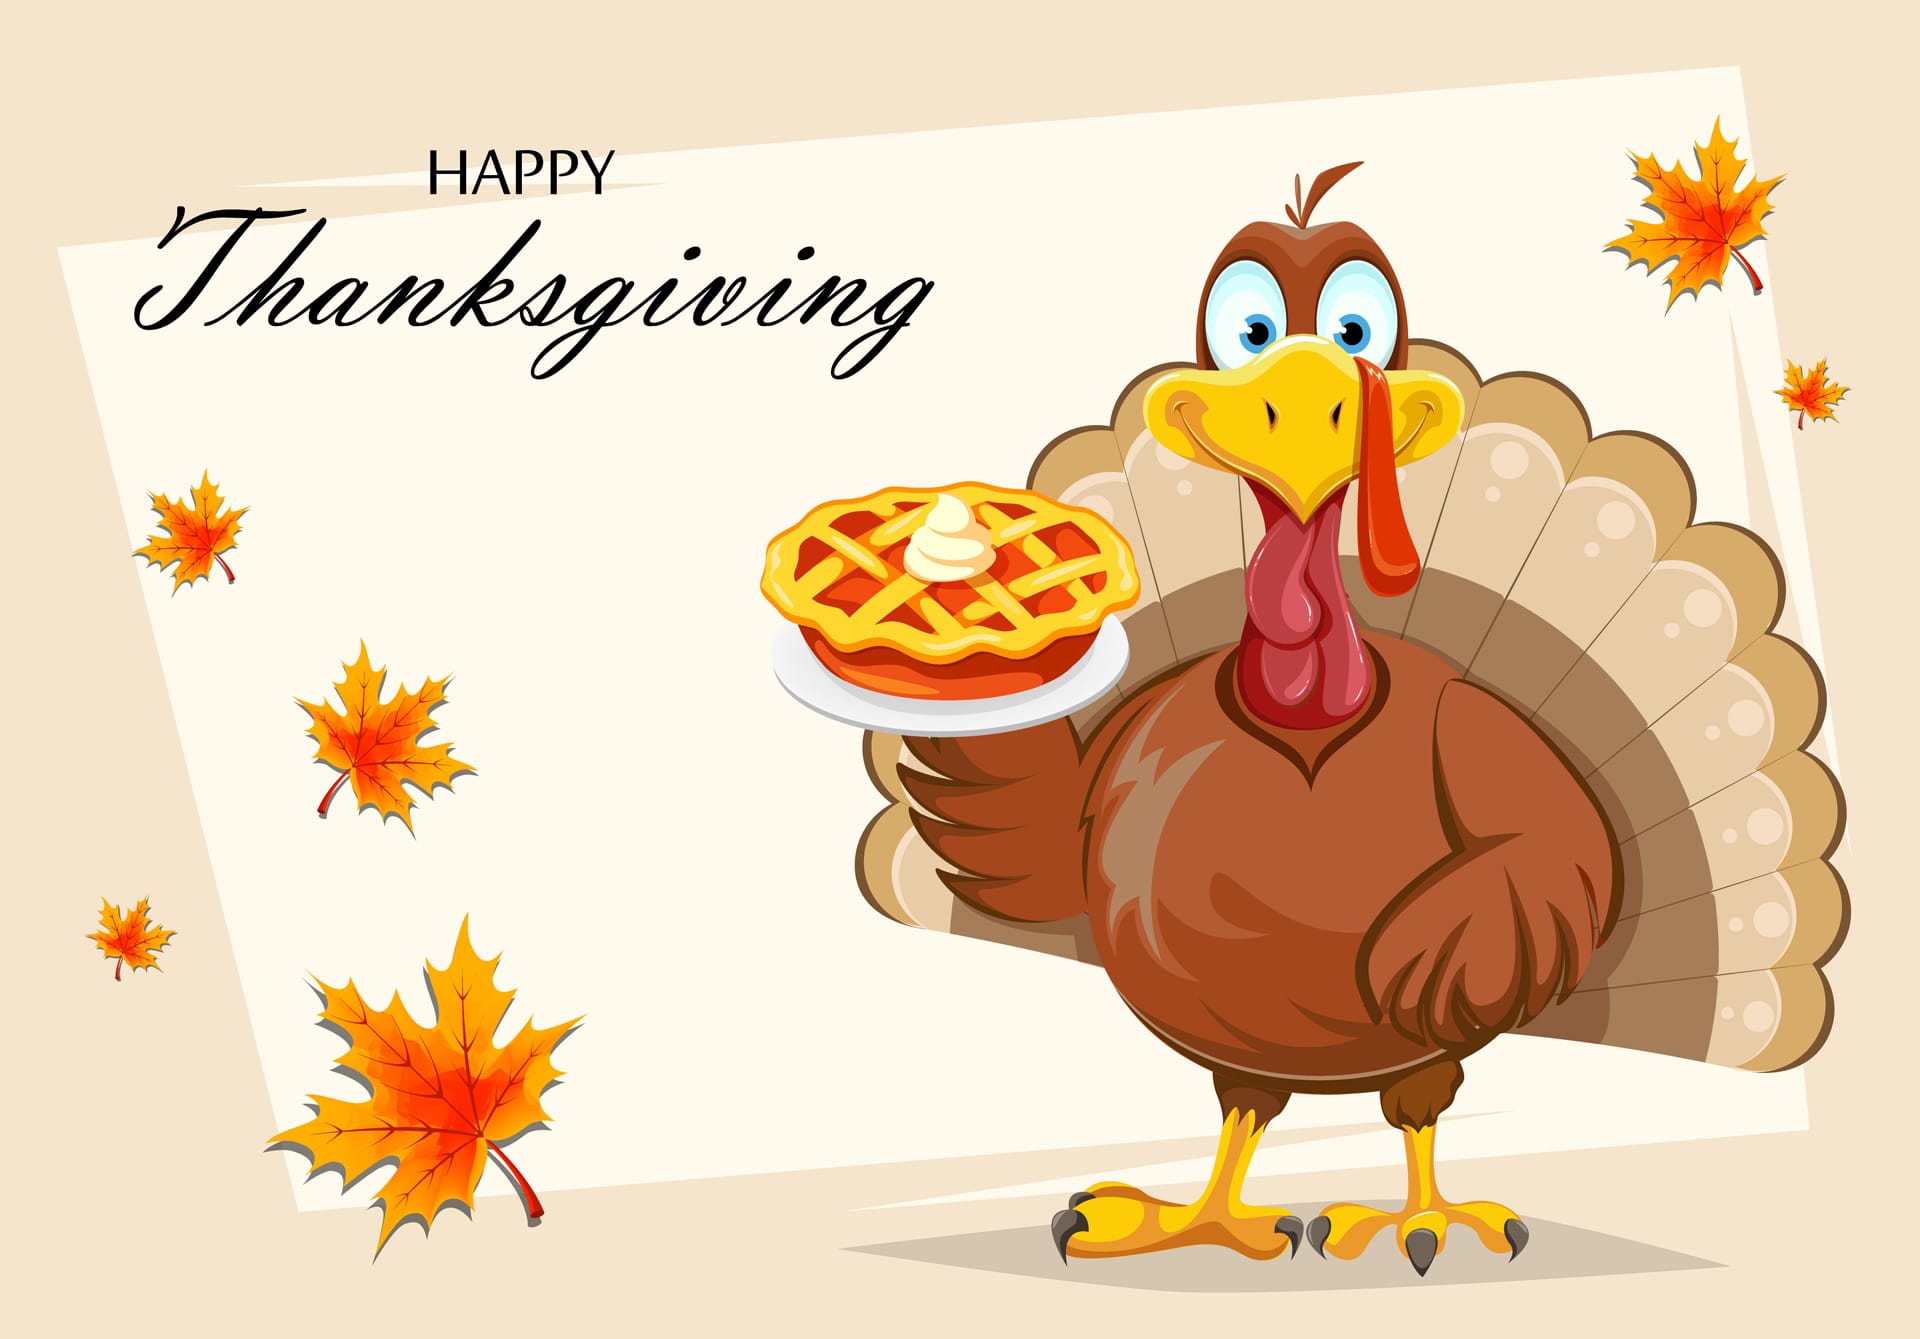 Funny thanksgiving turkey bird holding pumpkin pie